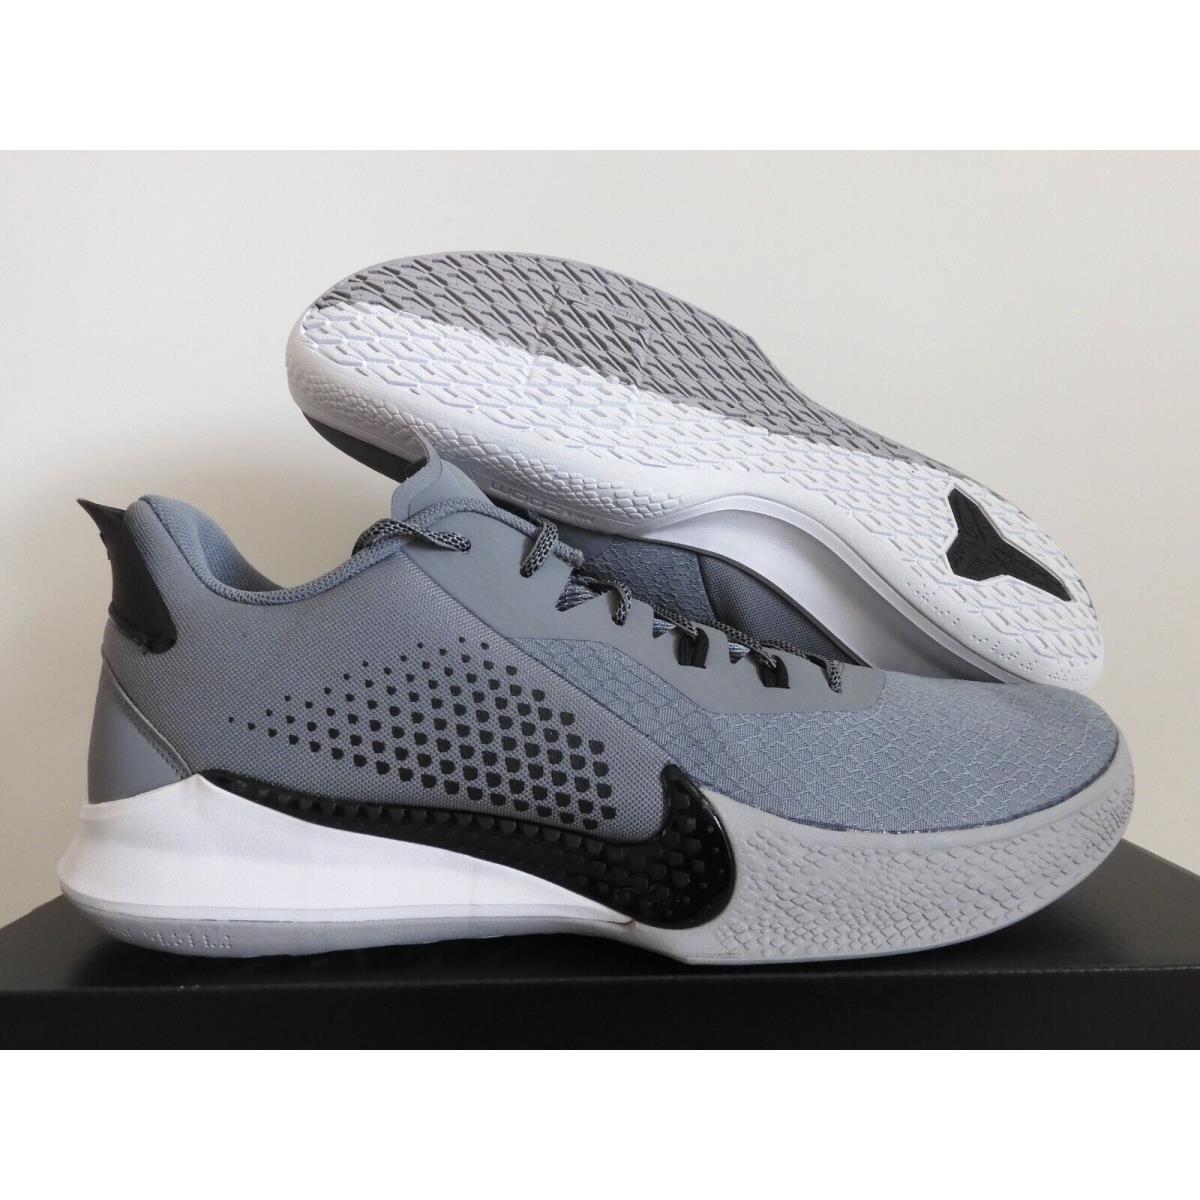 Nike Mamba Fury Kobe TB Cool Grey-black-wolf Grey SZ 18 CK6632-001